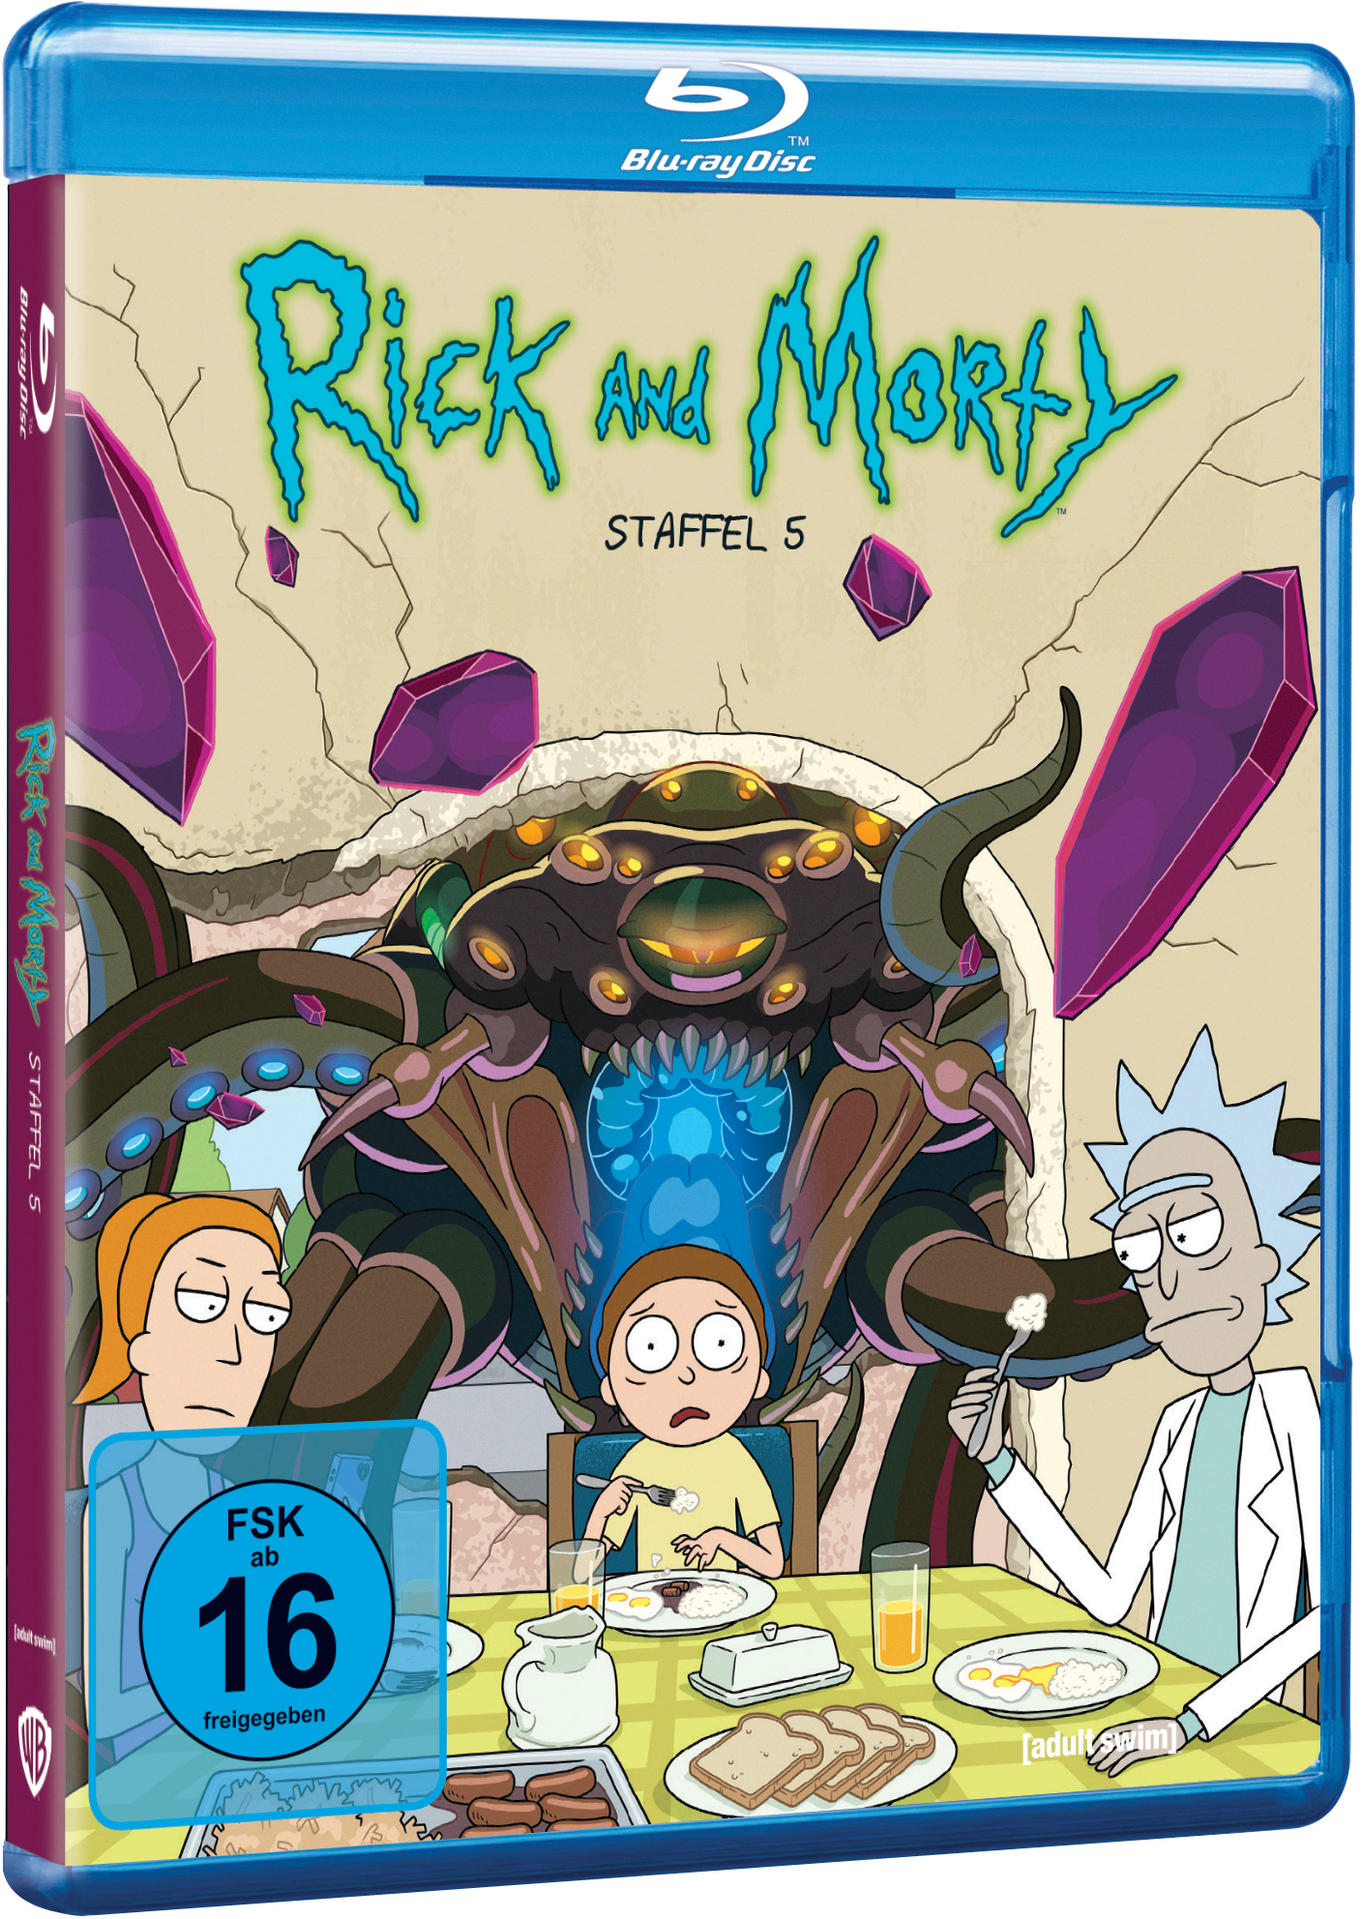 Blu-ray and Rick Staffel 5 Morty: